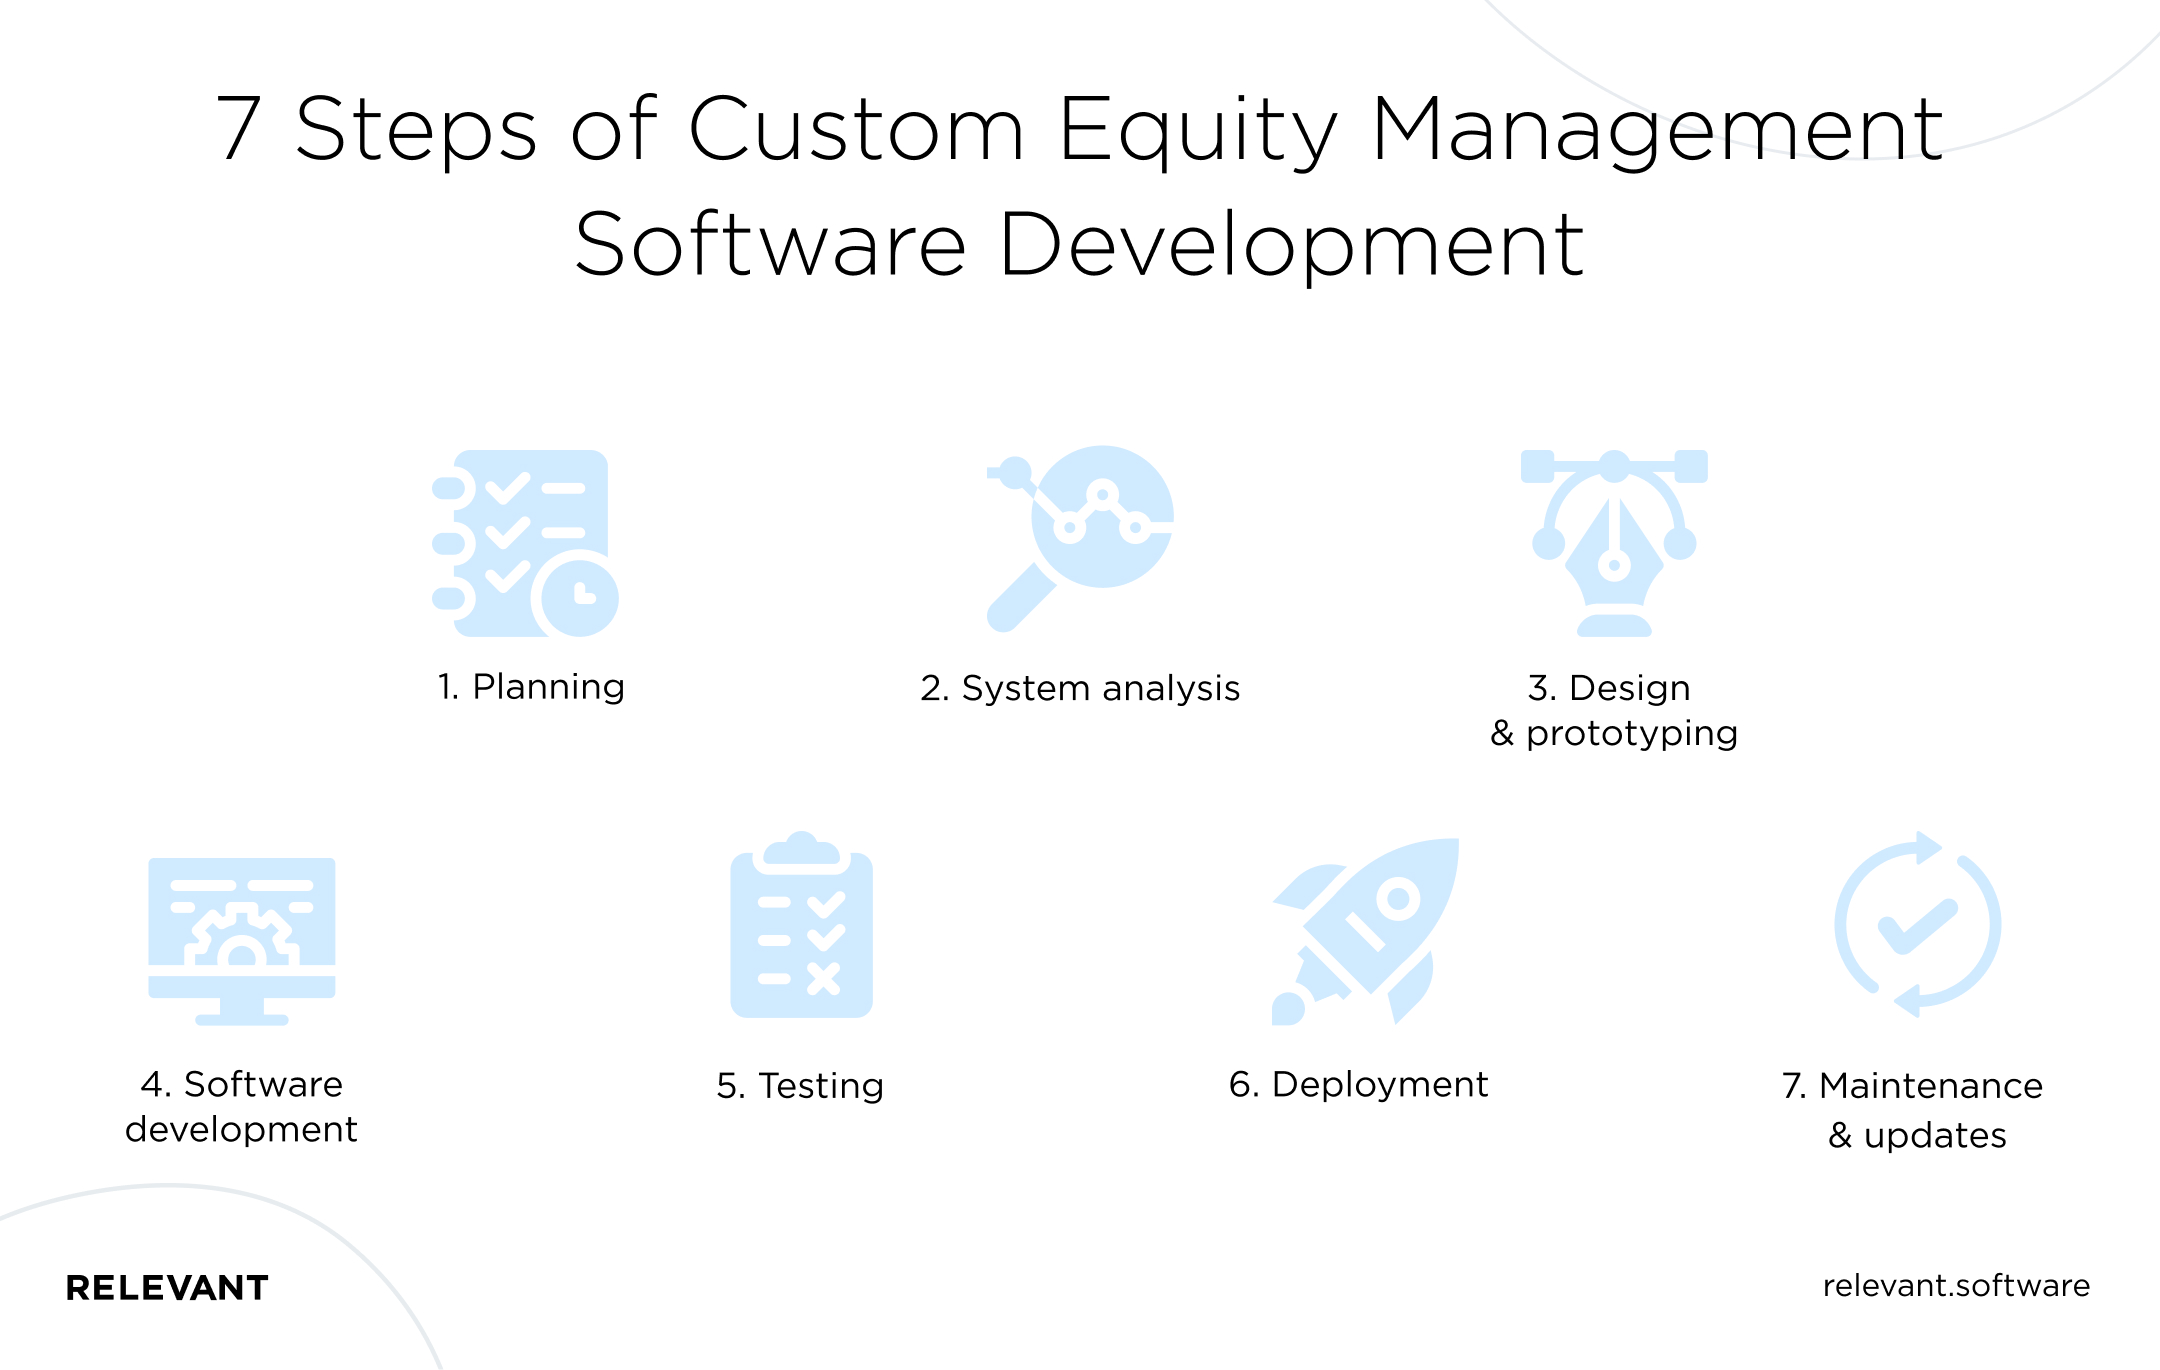 7 Steps of Custom Equity Management Software Development